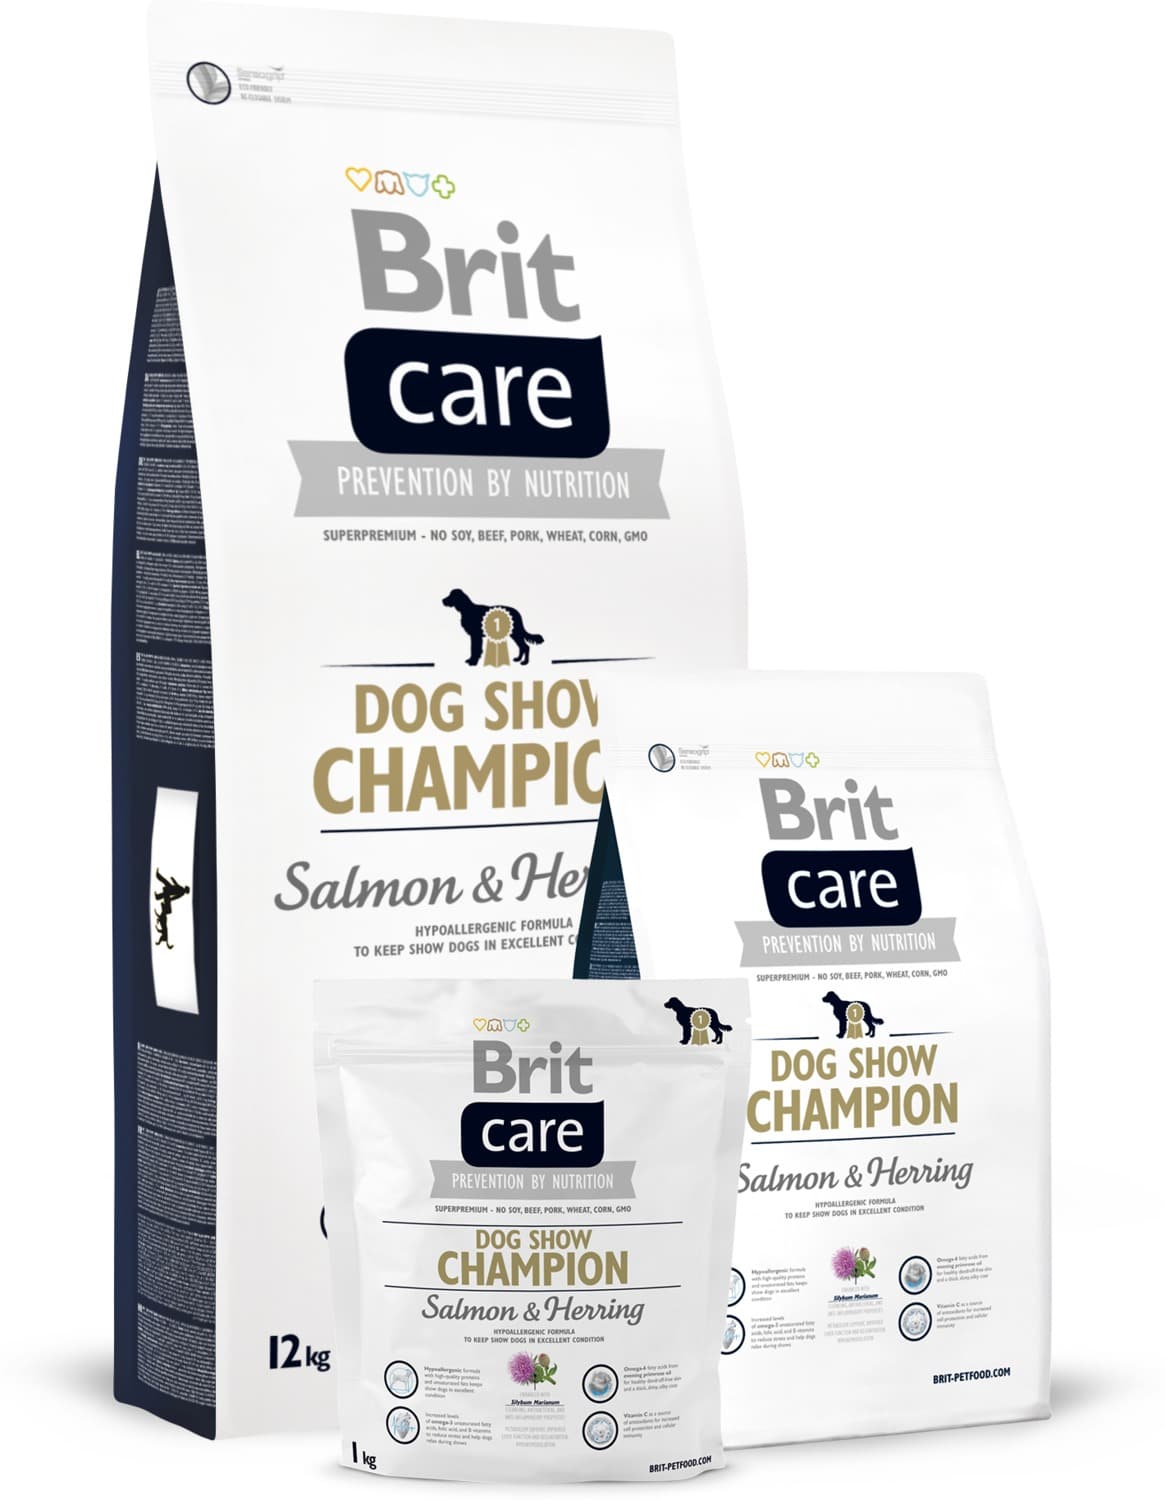 Brit-care-dog-show-champion-salmon-herring